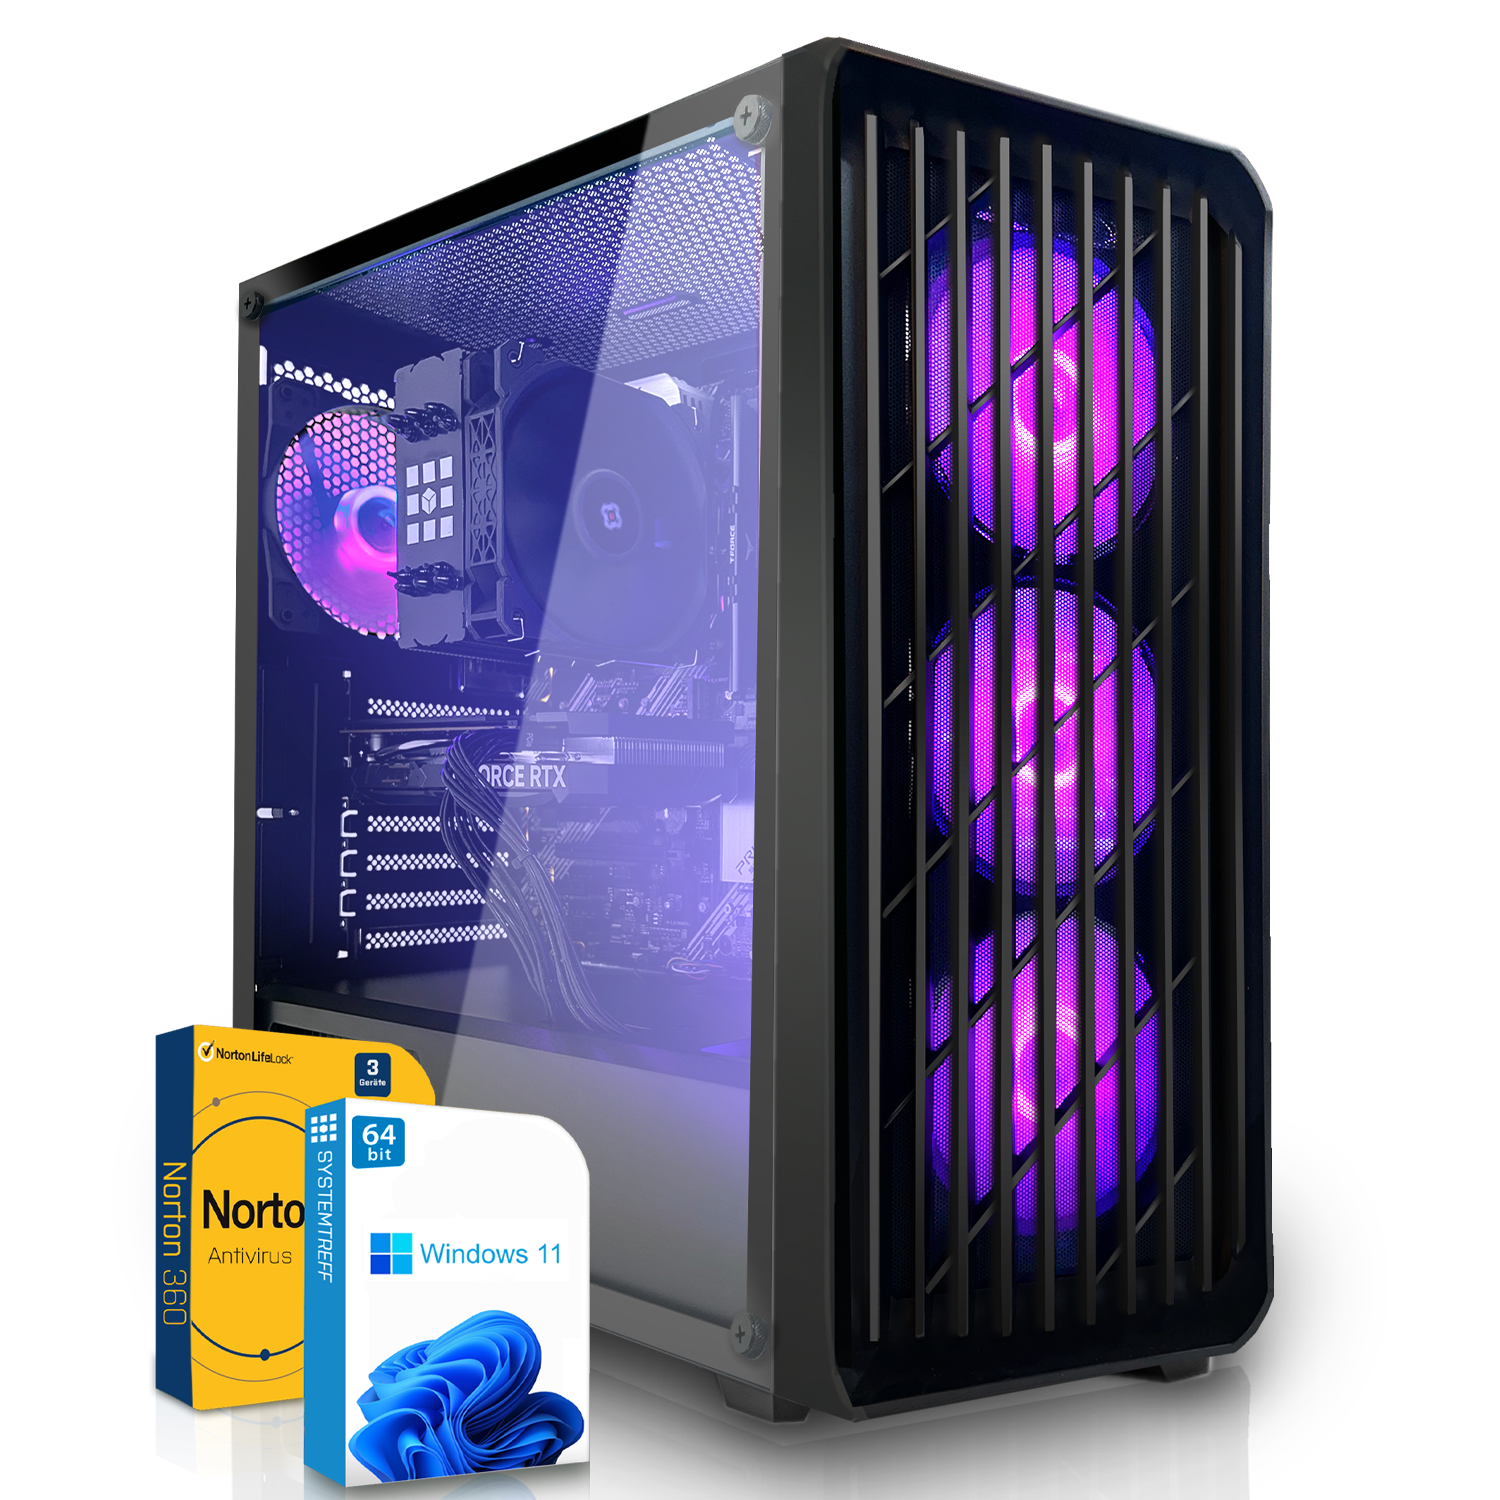 SYSTEMTREFF Pro Gaming Radeon™ PC Gaming RAM, Intel 16 AMD mit mSSD, Core™ GB Windows Intel® 6650 RX Pro, Core 1000 XT i5-12600KF, GB i5 11 Prozessor